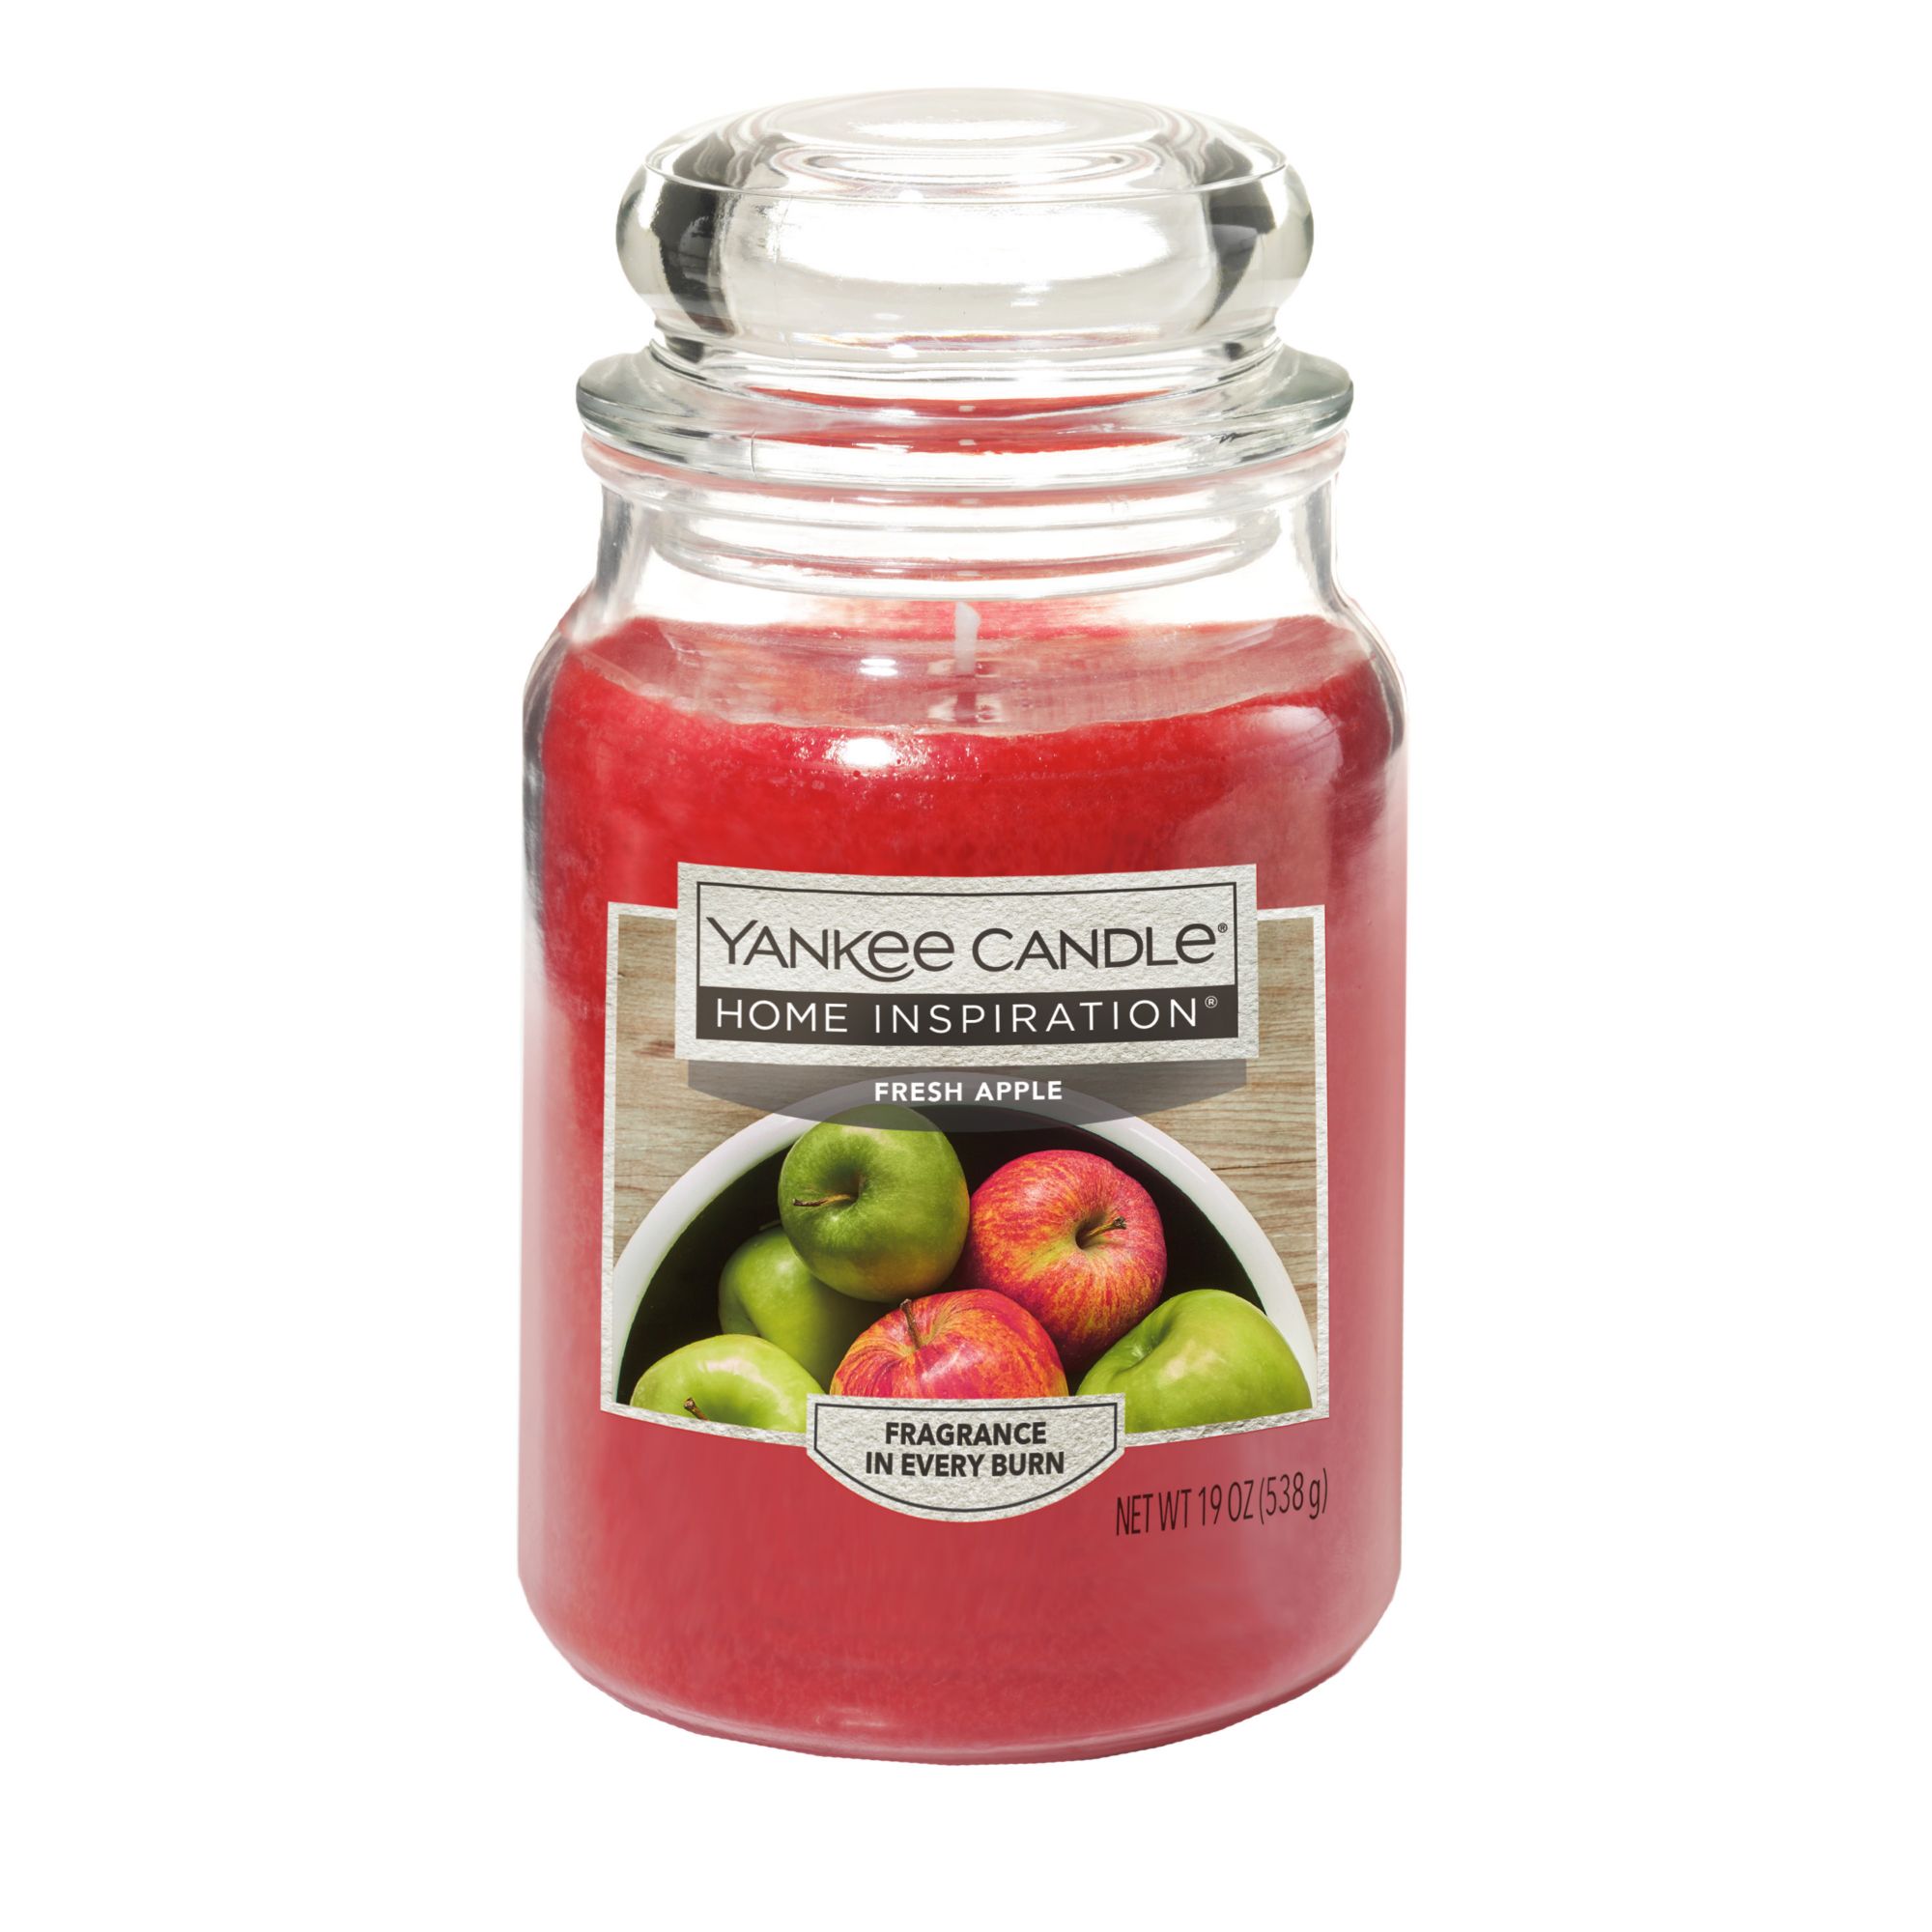 Yankee Candle Macintosh Whole Home Freshener